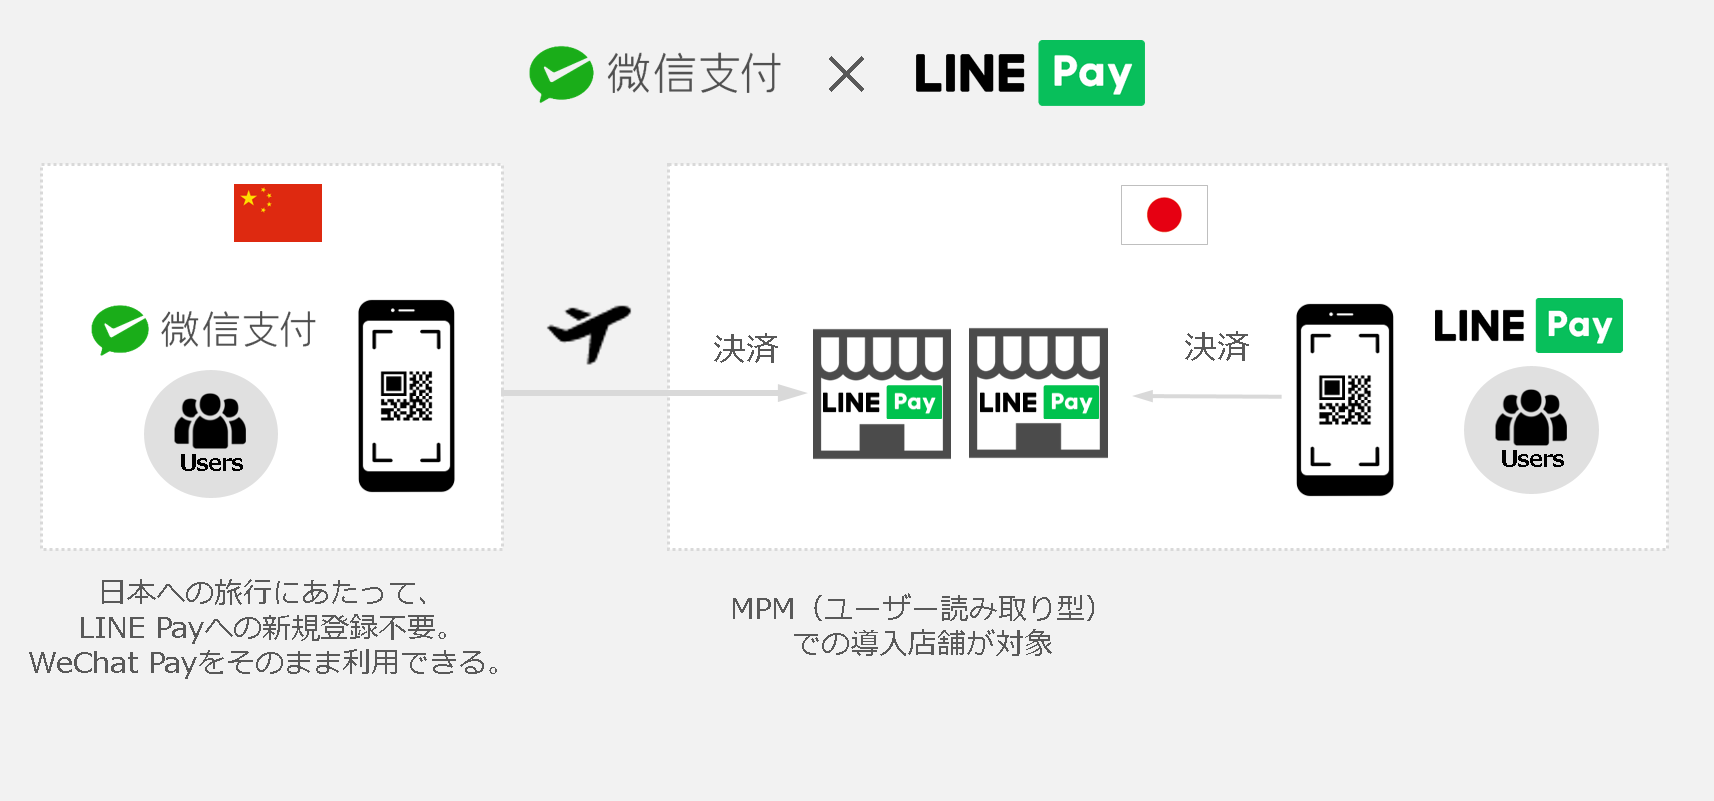 Line Smart City 福岡市公共施設でwechat Pay Naver Payが利用可能に